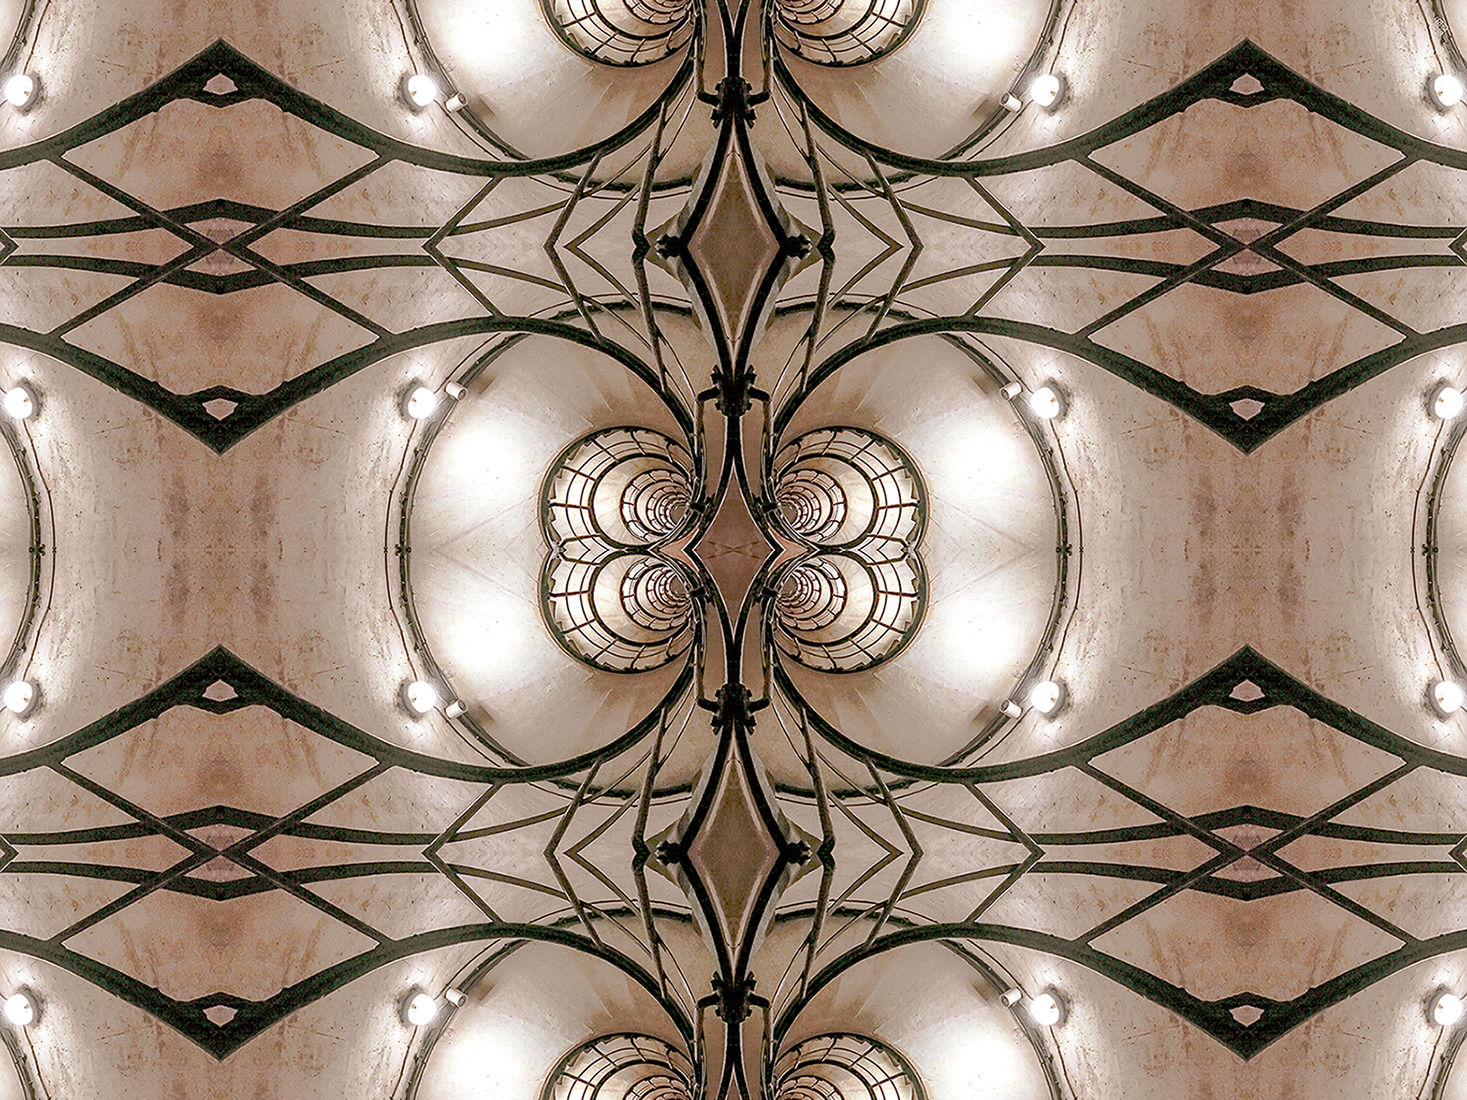 Kate wilson arc de triomphe staircase photographic design 30x40 inches luyqou